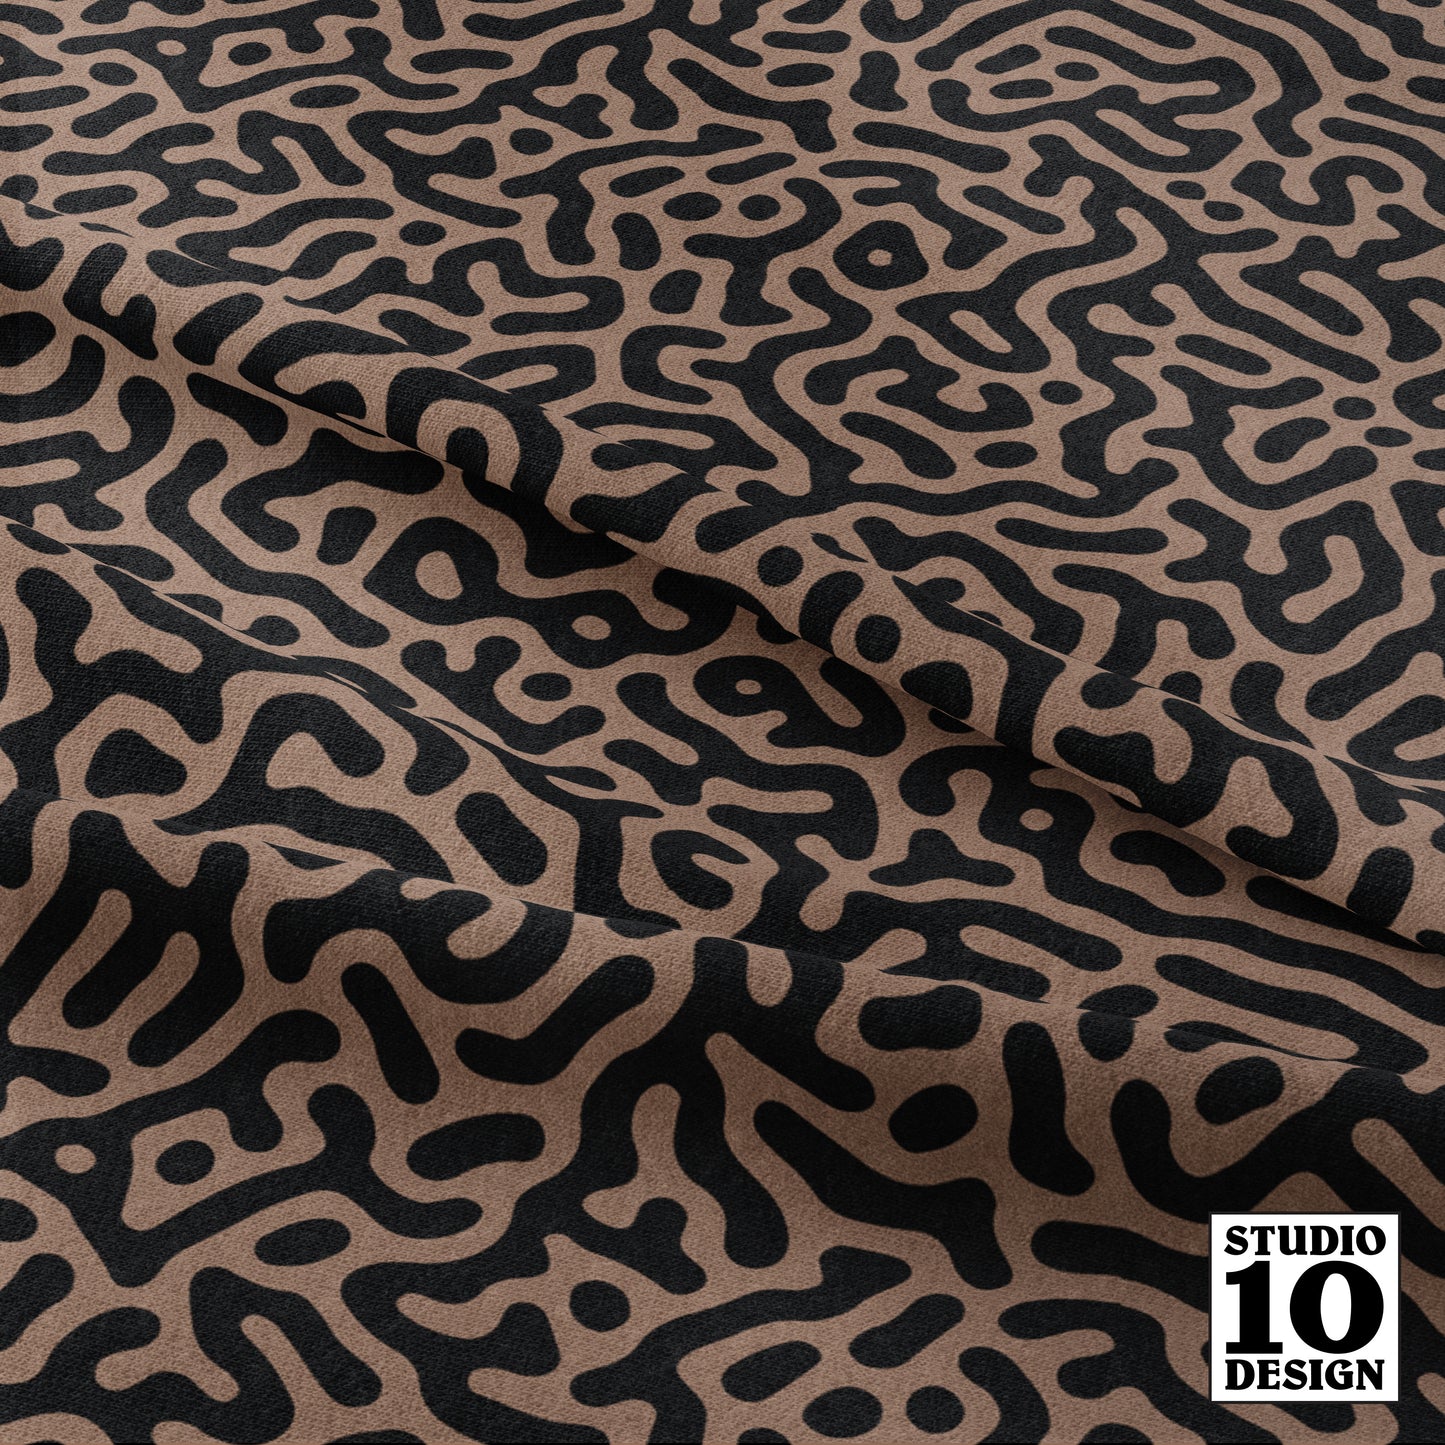 Turing Pattern I: Black + Mocha Printed Fabric by Studio Ten Design